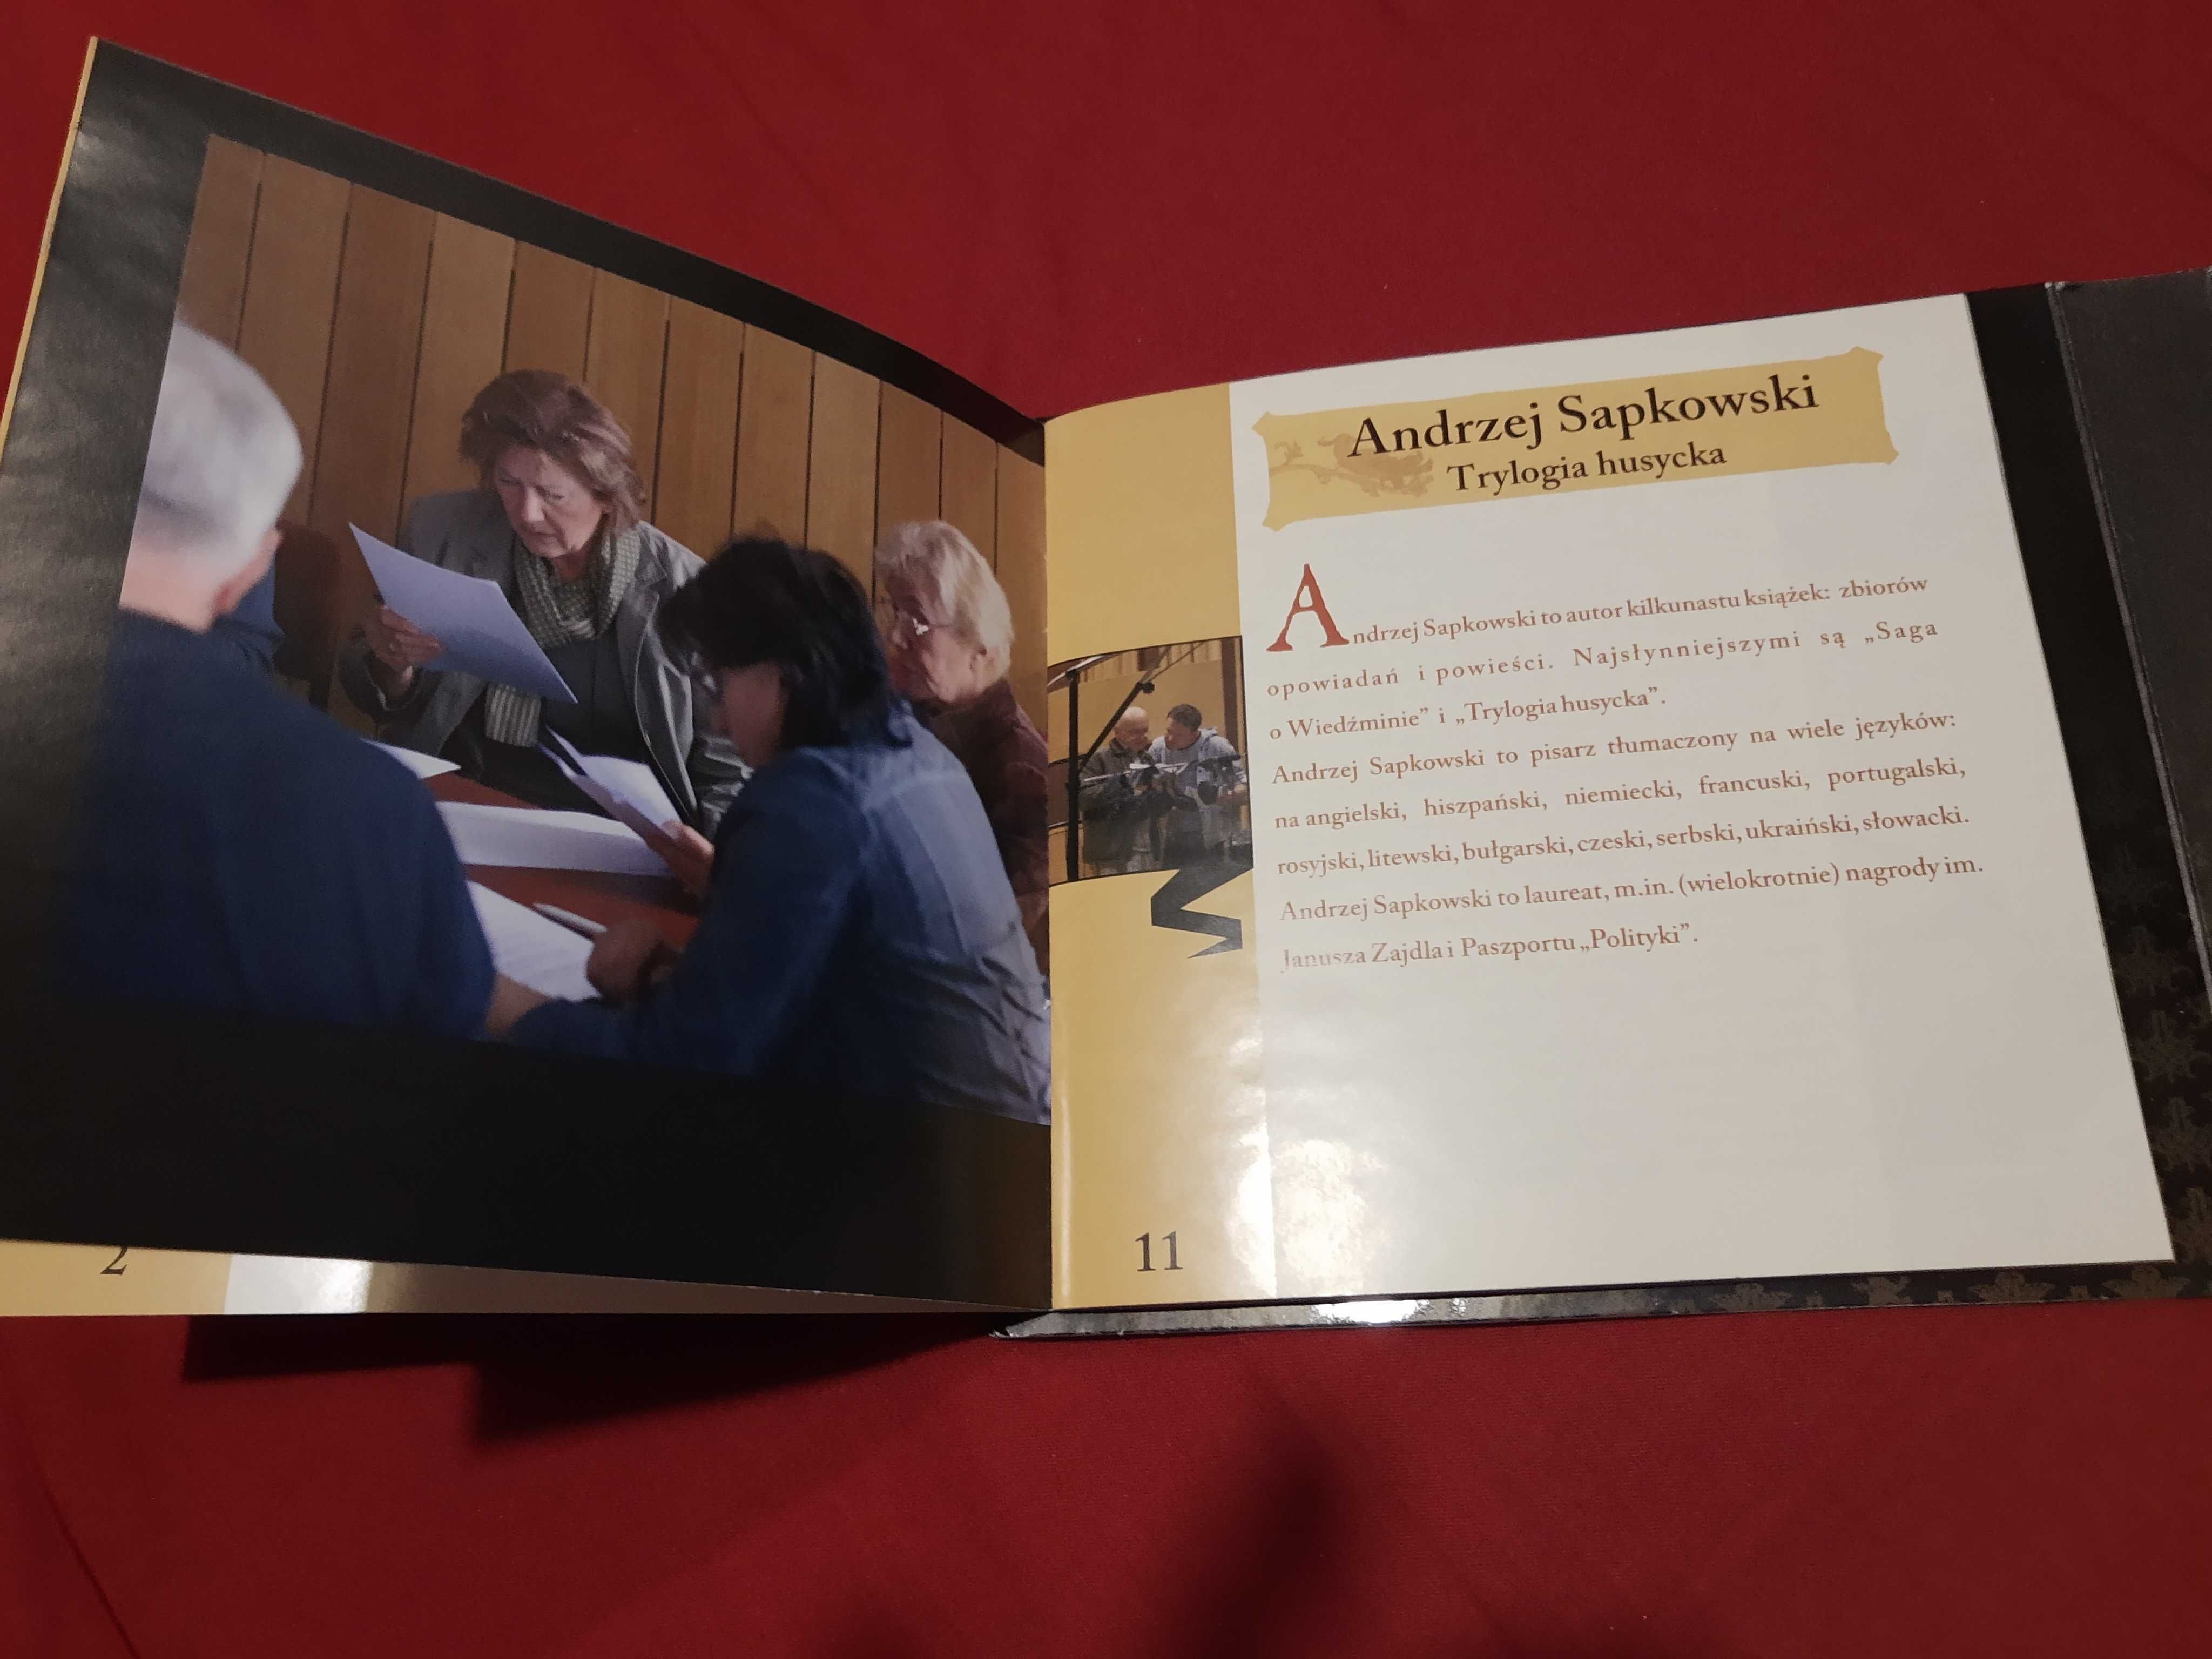 Audiobook 3 CD Narrenturm Sapkowski